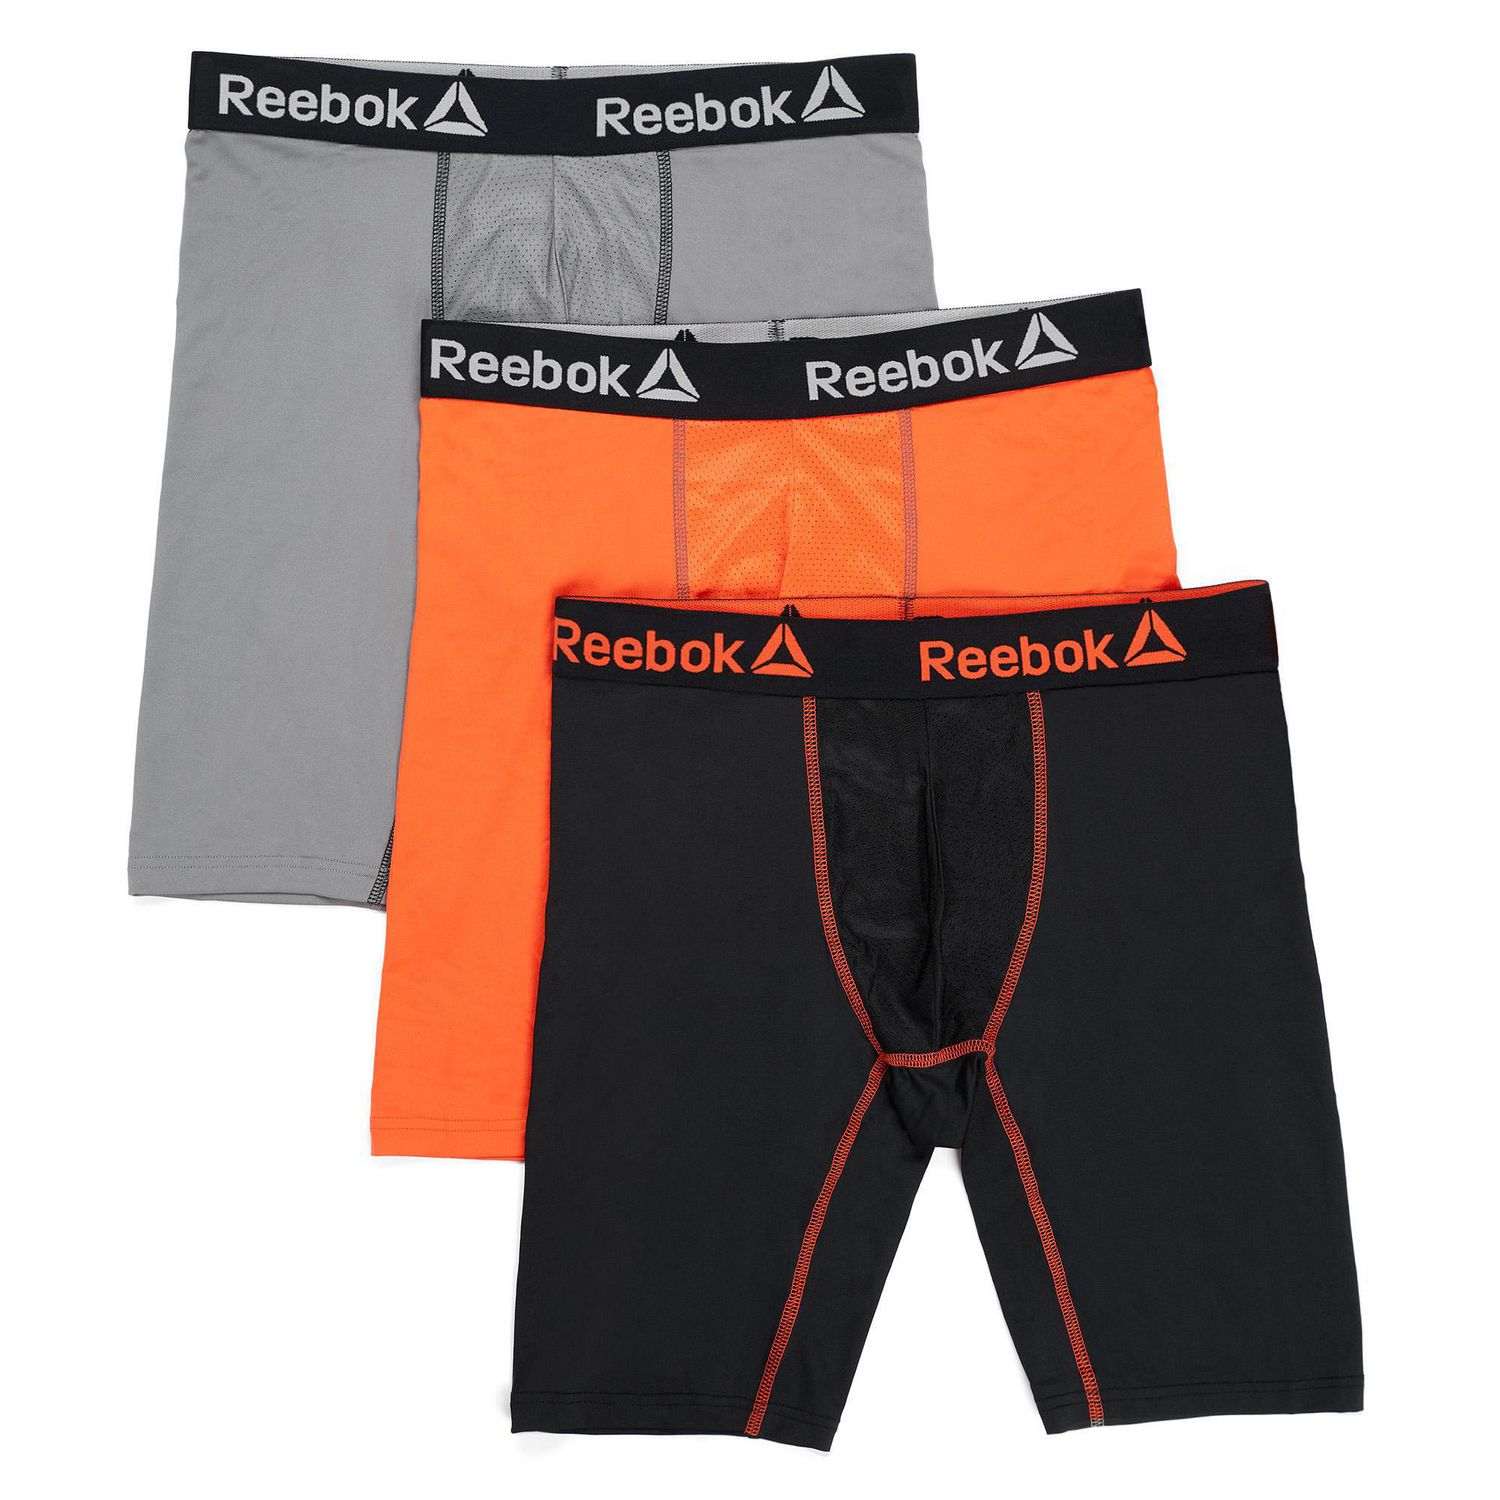 Reebok Men's Underwear – Long Leg Performance Boxer Briefs (6 Pack)